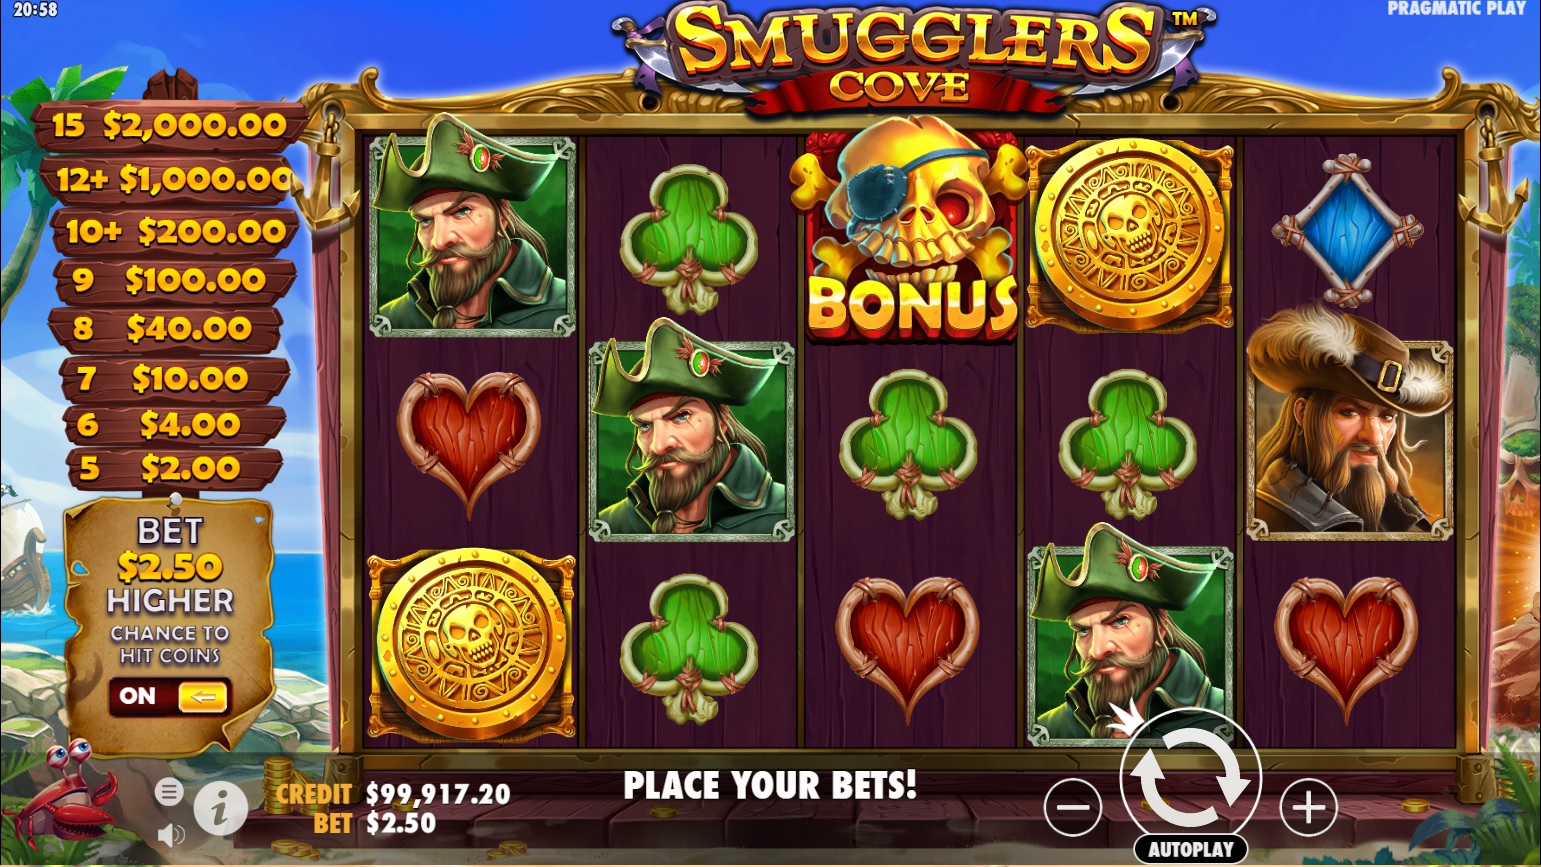 Smugglers Cove slot game